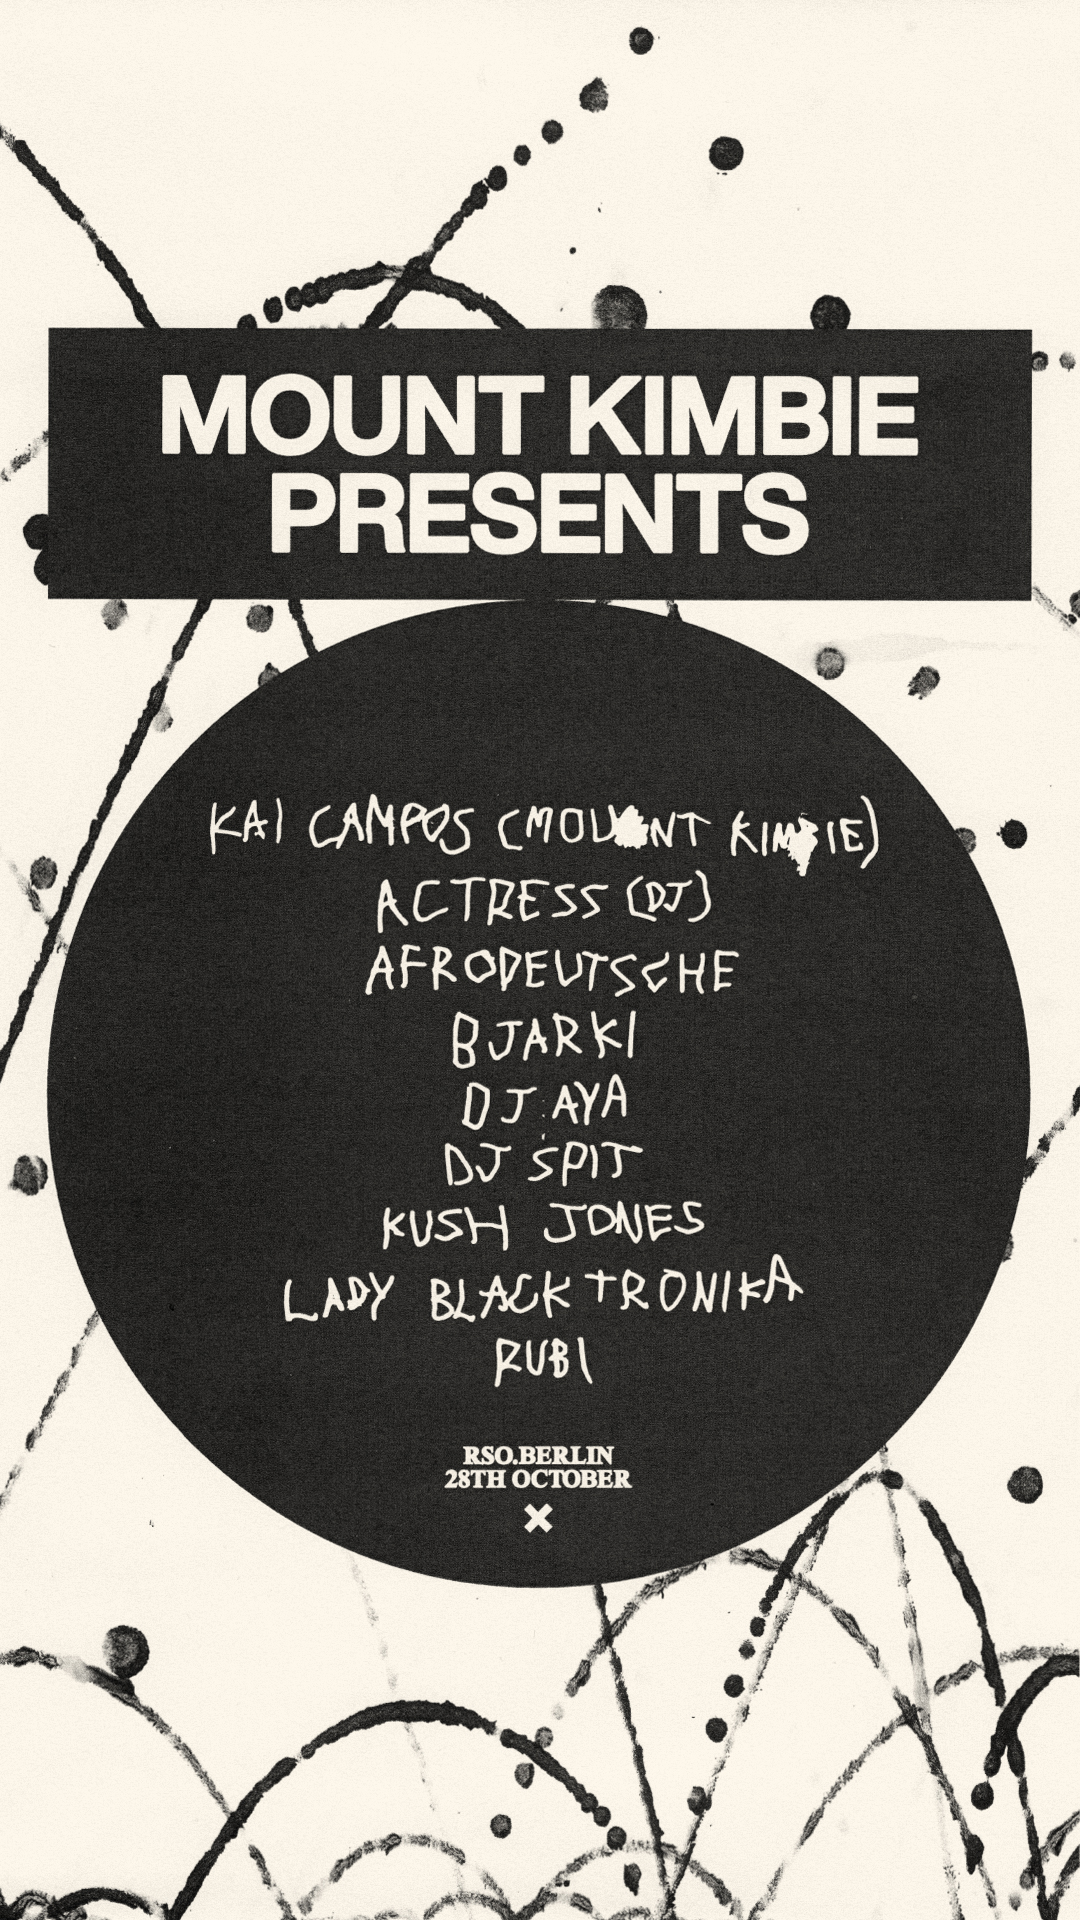 Mount Kimbie pres. Kai Campos, Actress, Afrodeutsche, Bjarki, DJ